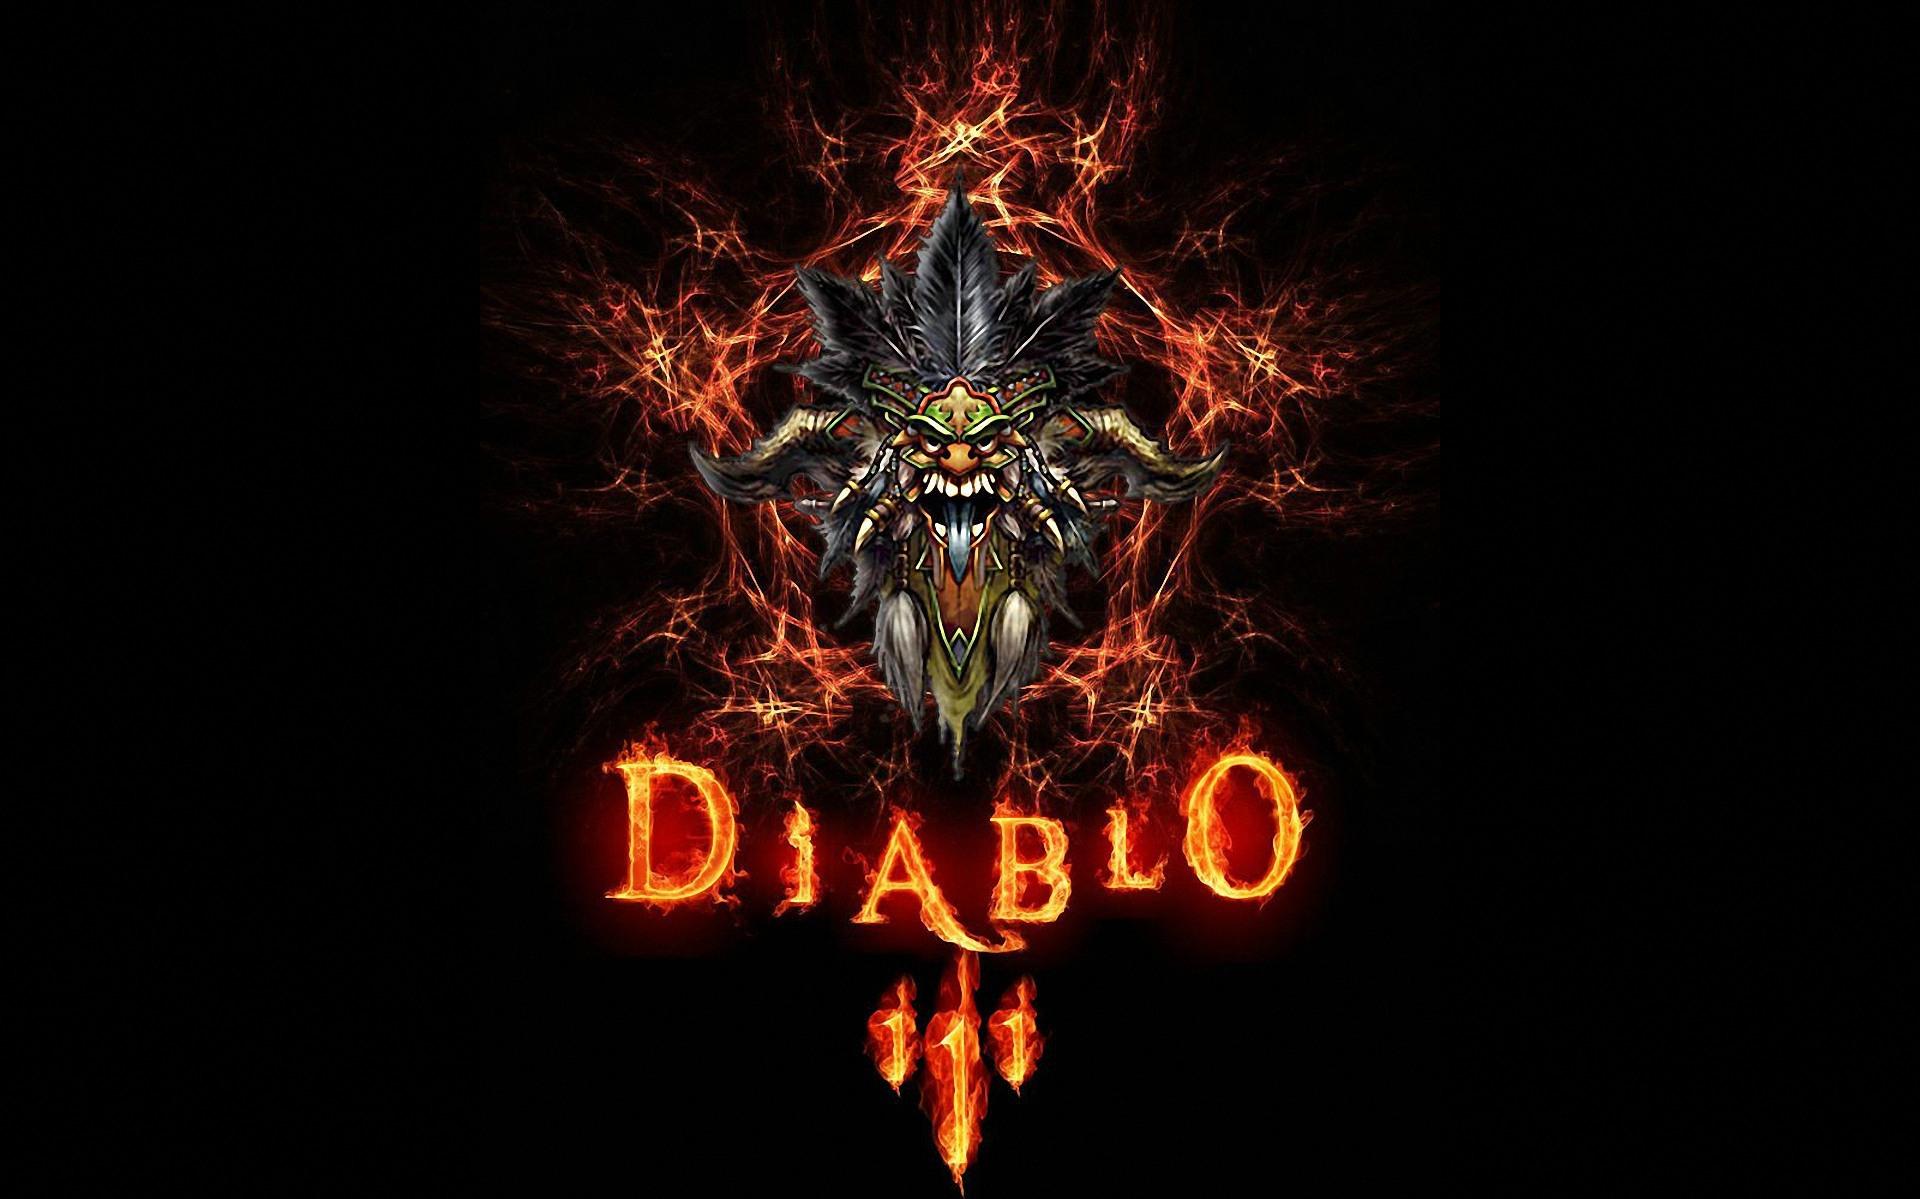 Video Game Diablo Iii HD Wallpaper